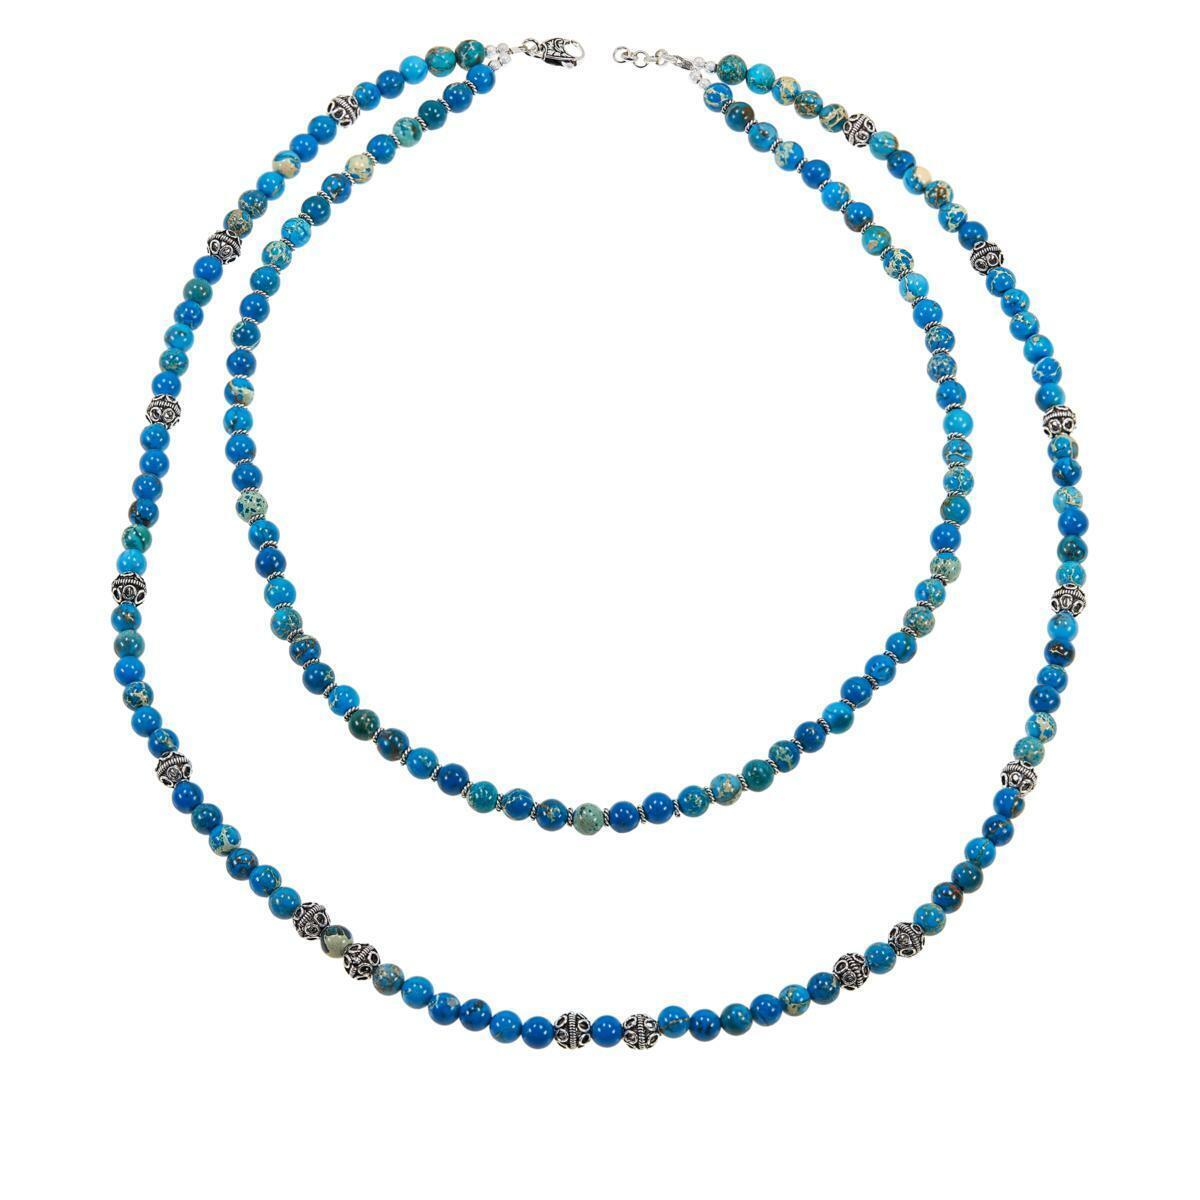 Ottoman Silver Jasper Blue 2-Strand Gemstone Bead Necklace - HSN $170